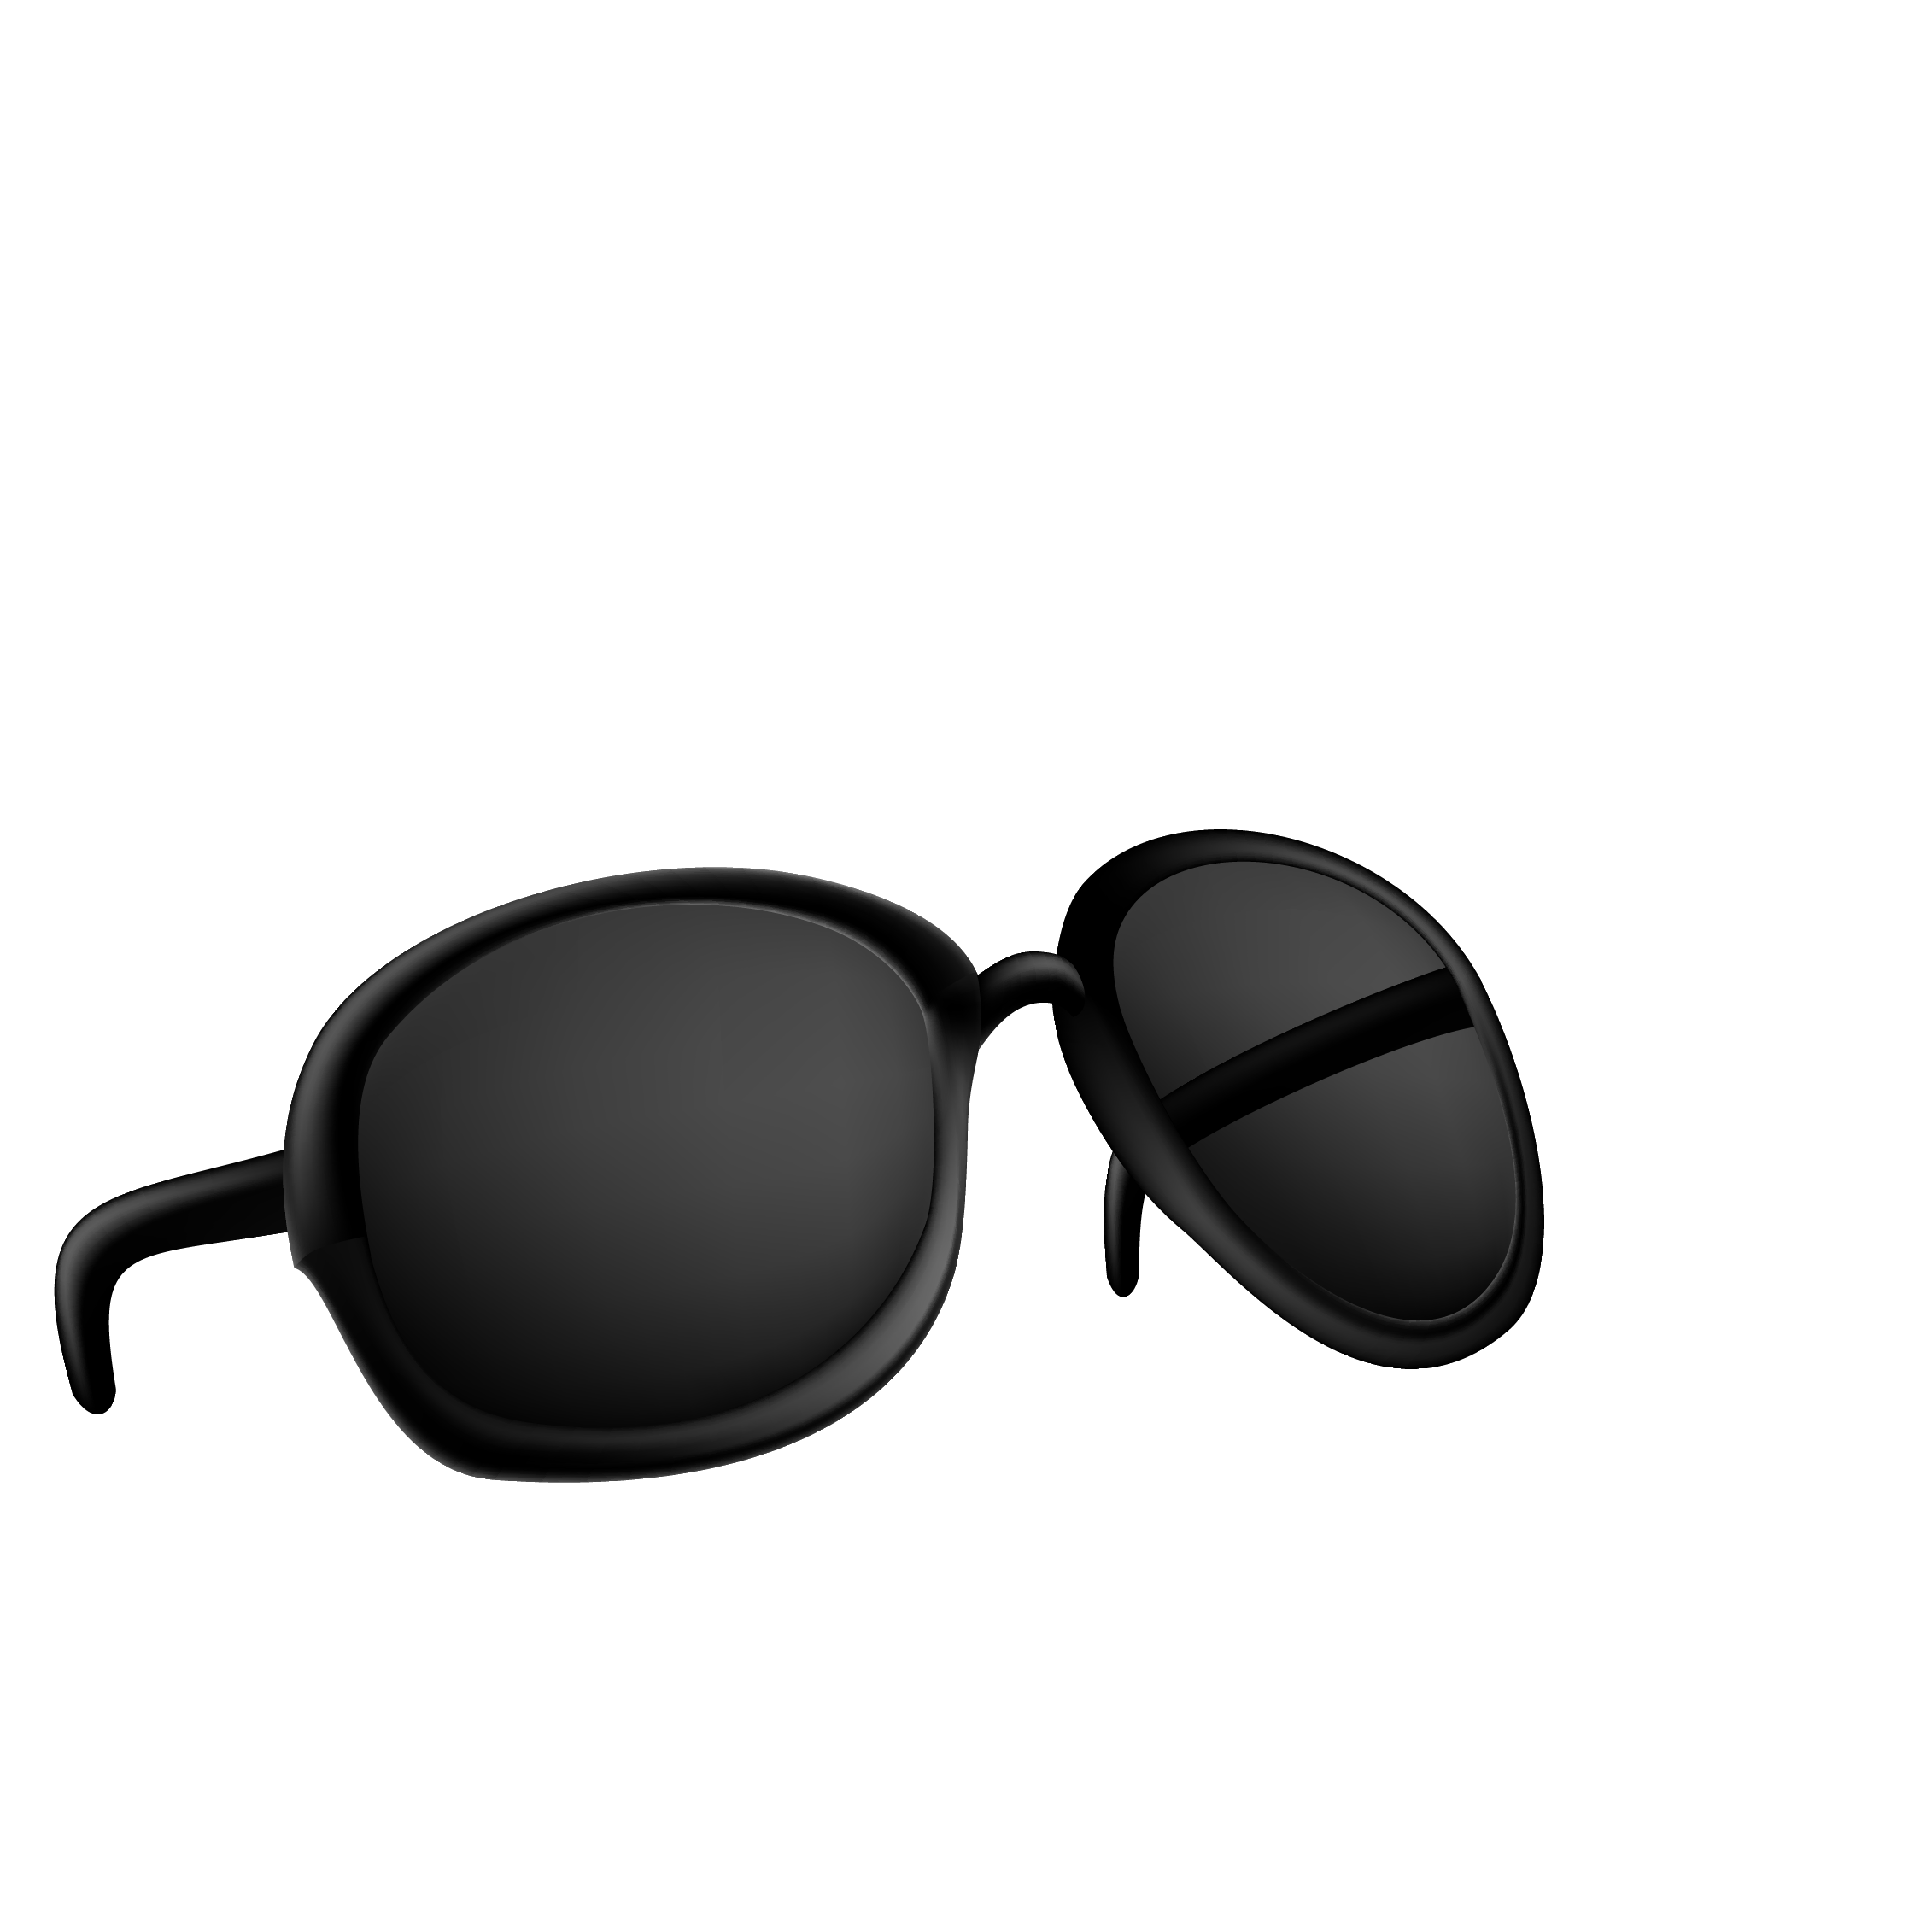 Adobe Illustrator Material Vector Black Sunglasses Clipart